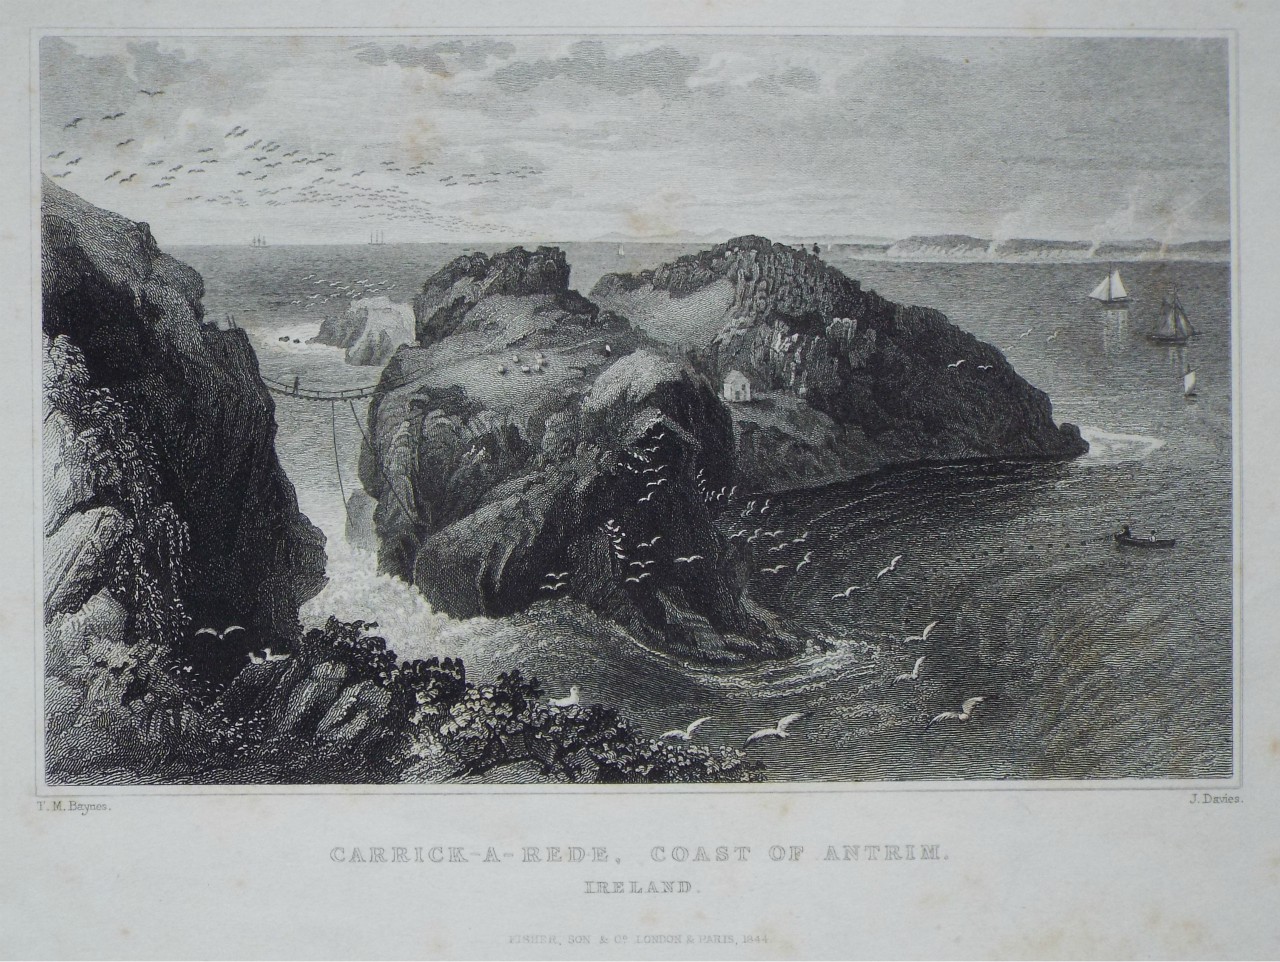 Print - Carrick-a-Rede, Coast of Antrim. Ireland. - Davies